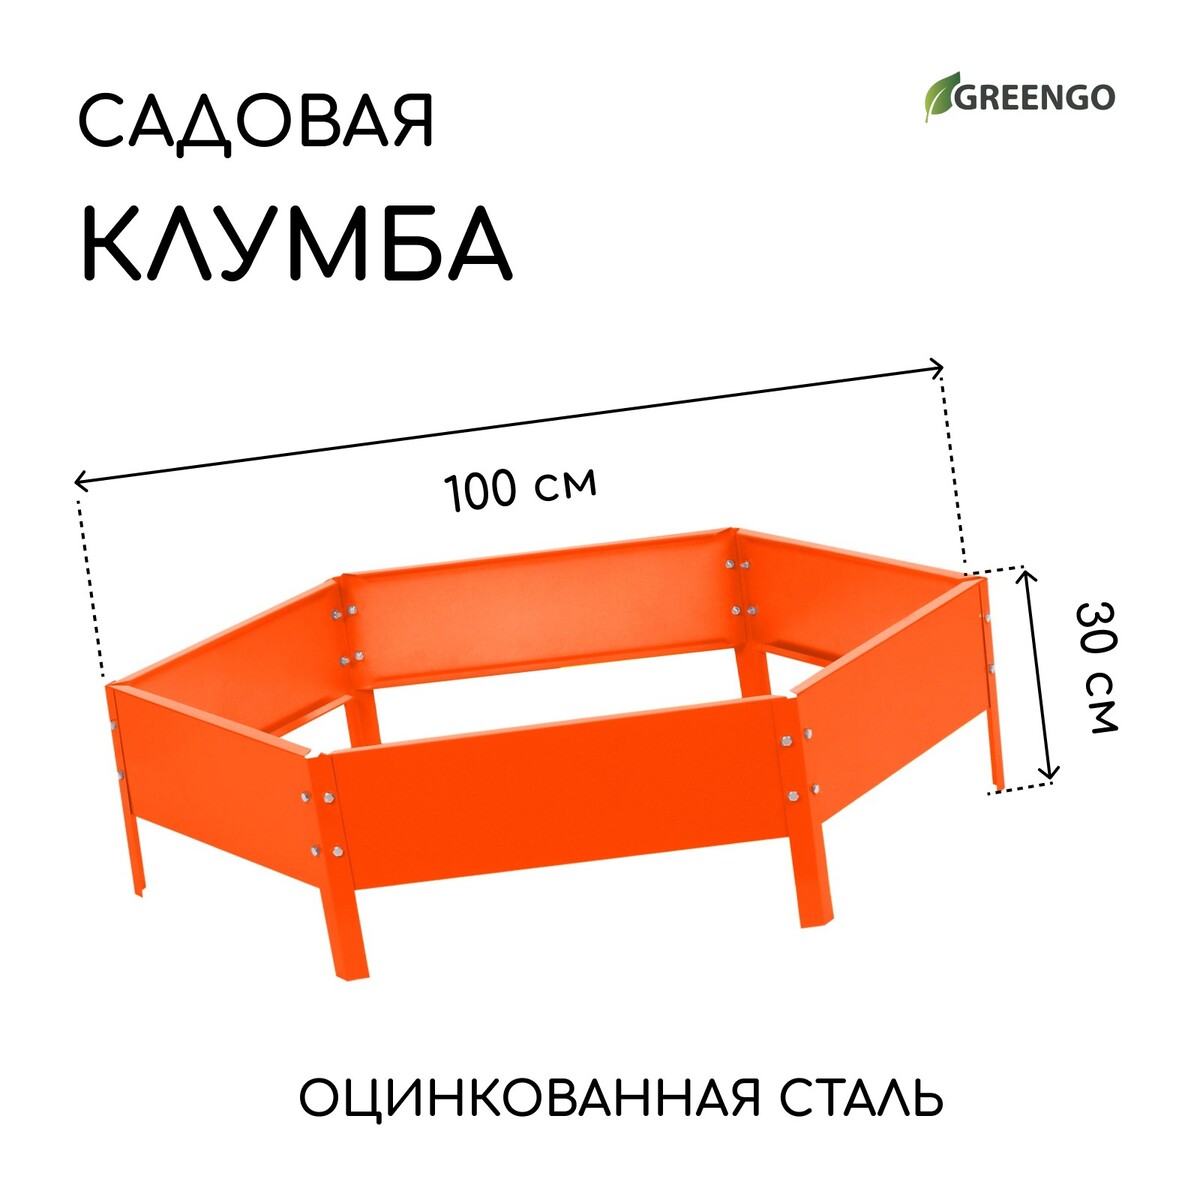 Клумба оцинкованная, d = 100 см, h = 15 см, оранжевая, greengo клумба оцинкованная 50 × 50 × 15 см оранжевая